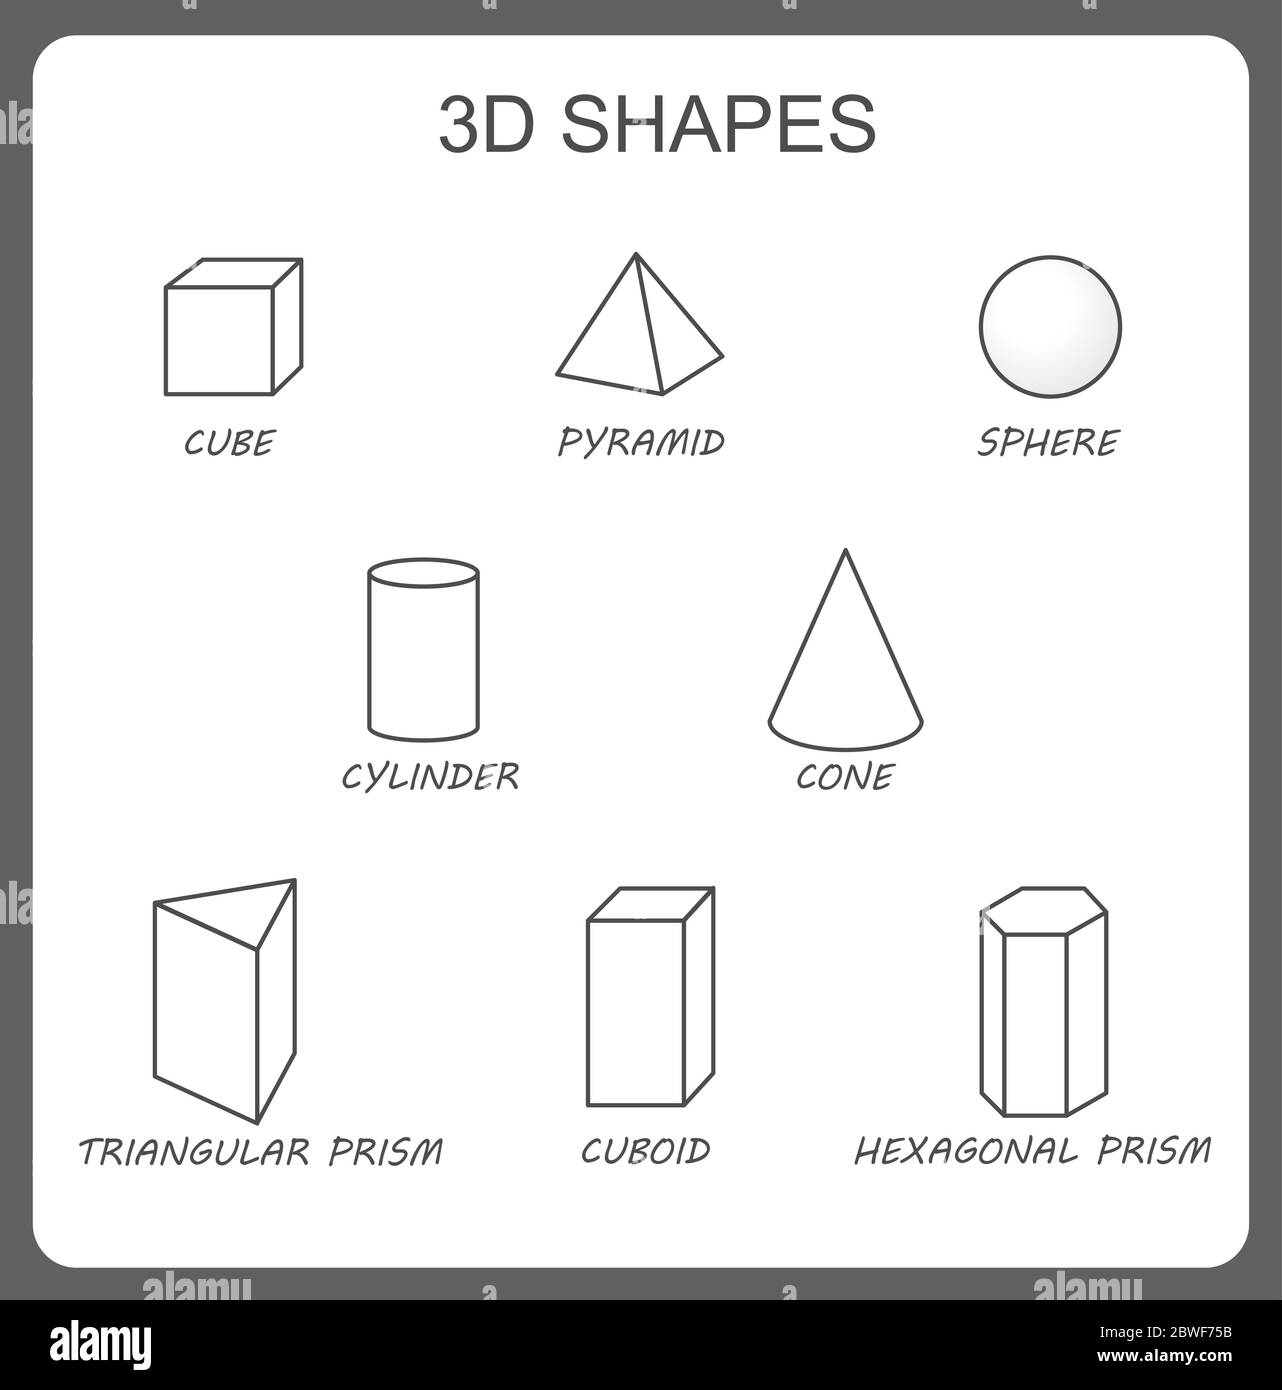 Solide 3d-Formen: Zylinder, Würfel, Prisma, Kugel, Pyramide, sechseckiges  Prisma, Kegel. Isolierte geometrische Vektorformen für Volumenkörper.  Poster für Lerngeometrie Stock-Vektorgrafik - Alamy